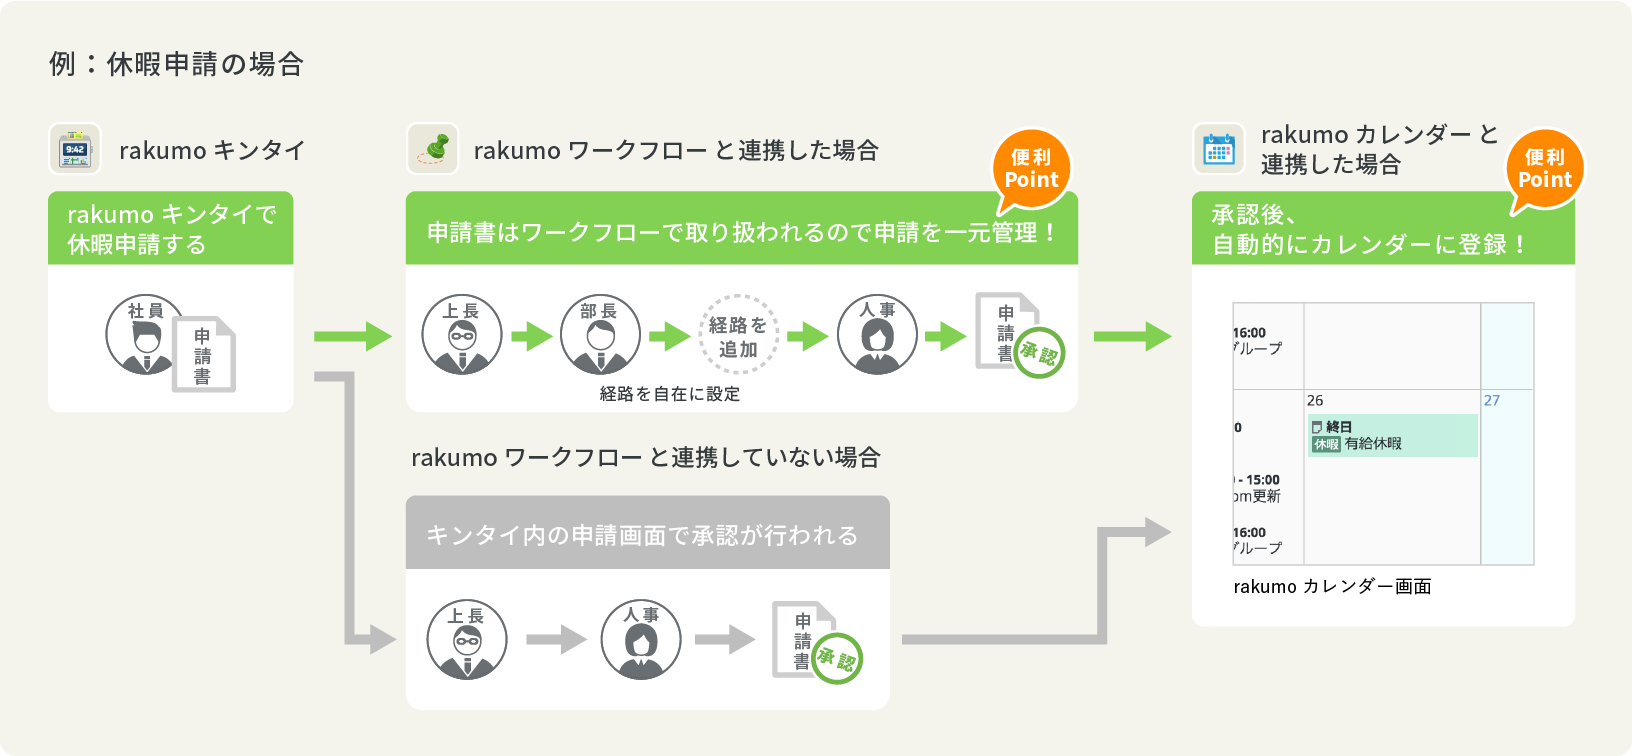 rakumo キンタイとrakumo カレンダーの連携について